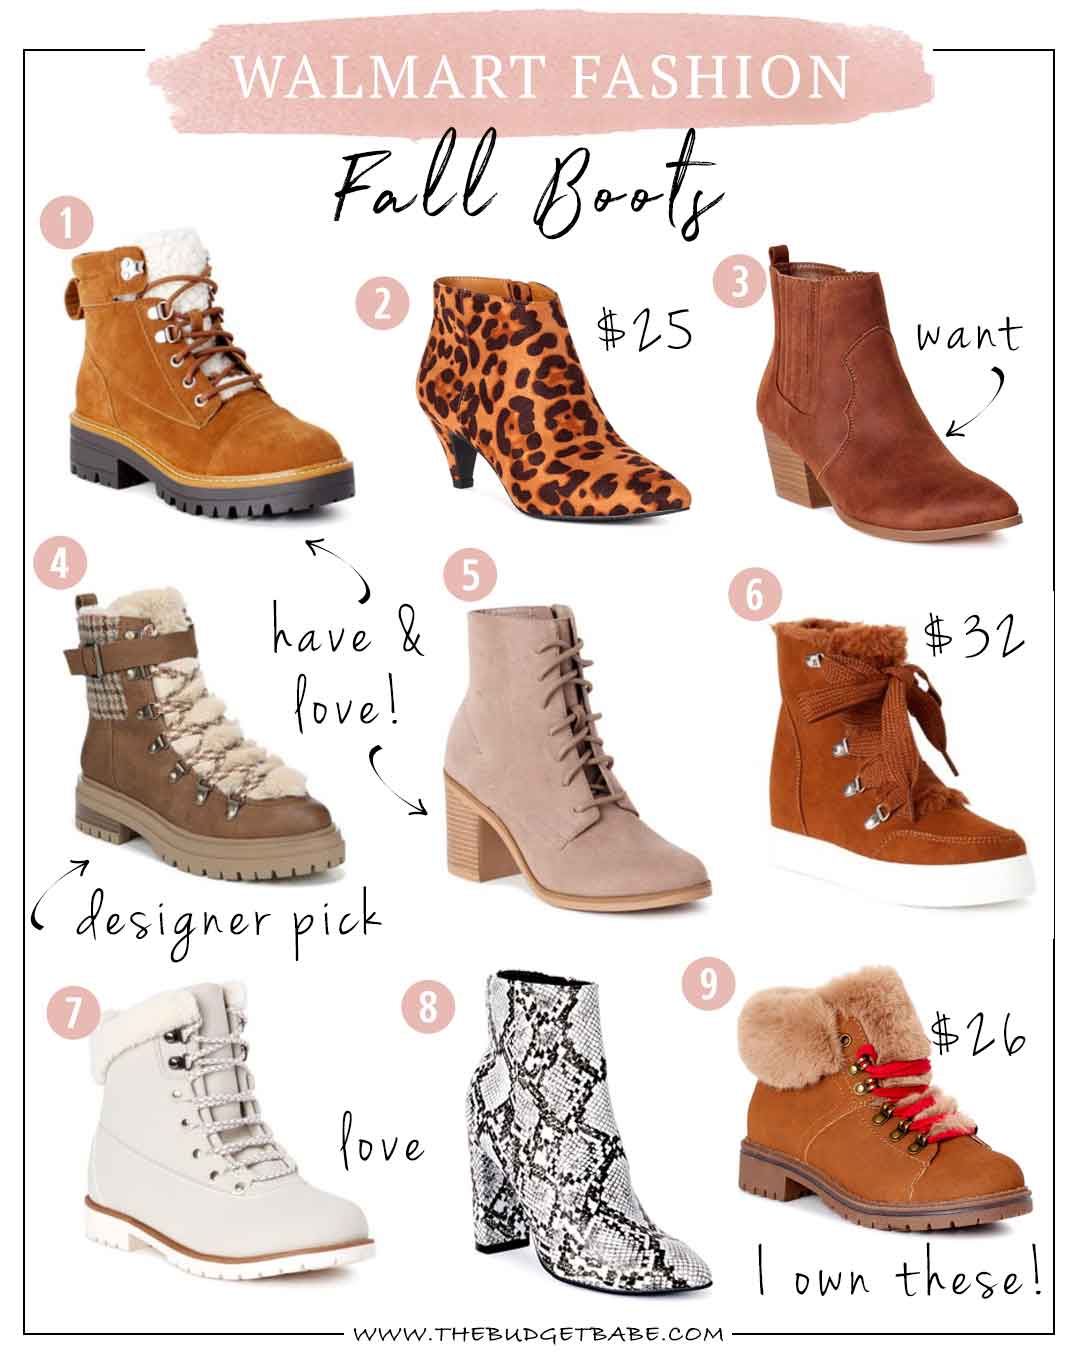 Walmart Fashion Best Fall Boots Under $50